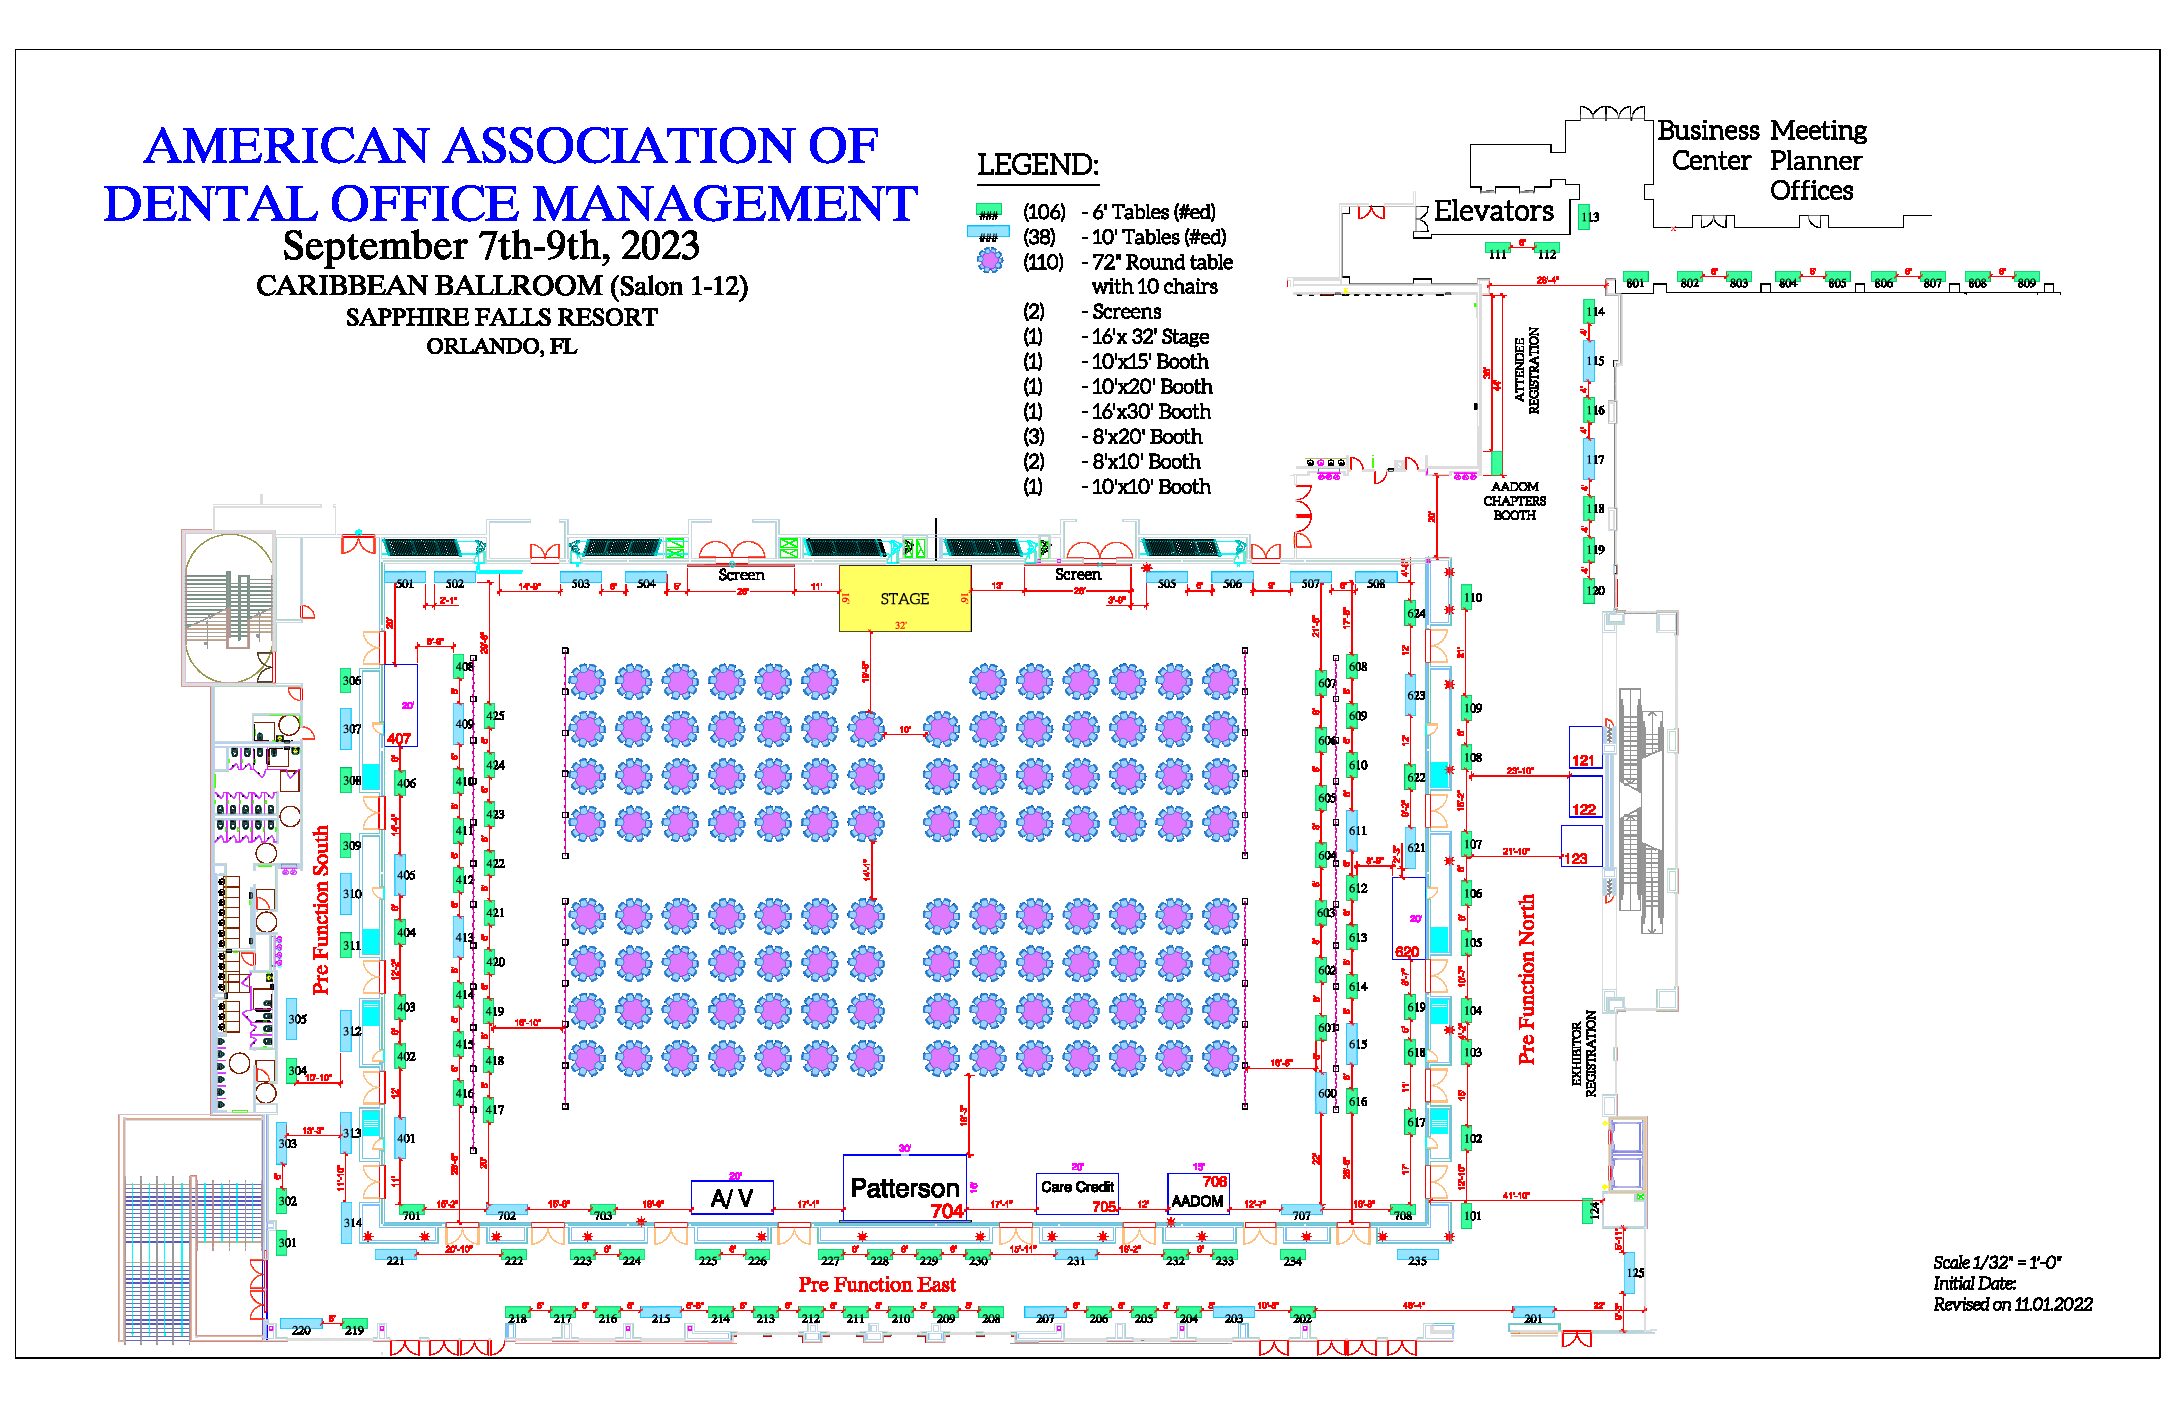 AADOM 2023 Conference Floorplan